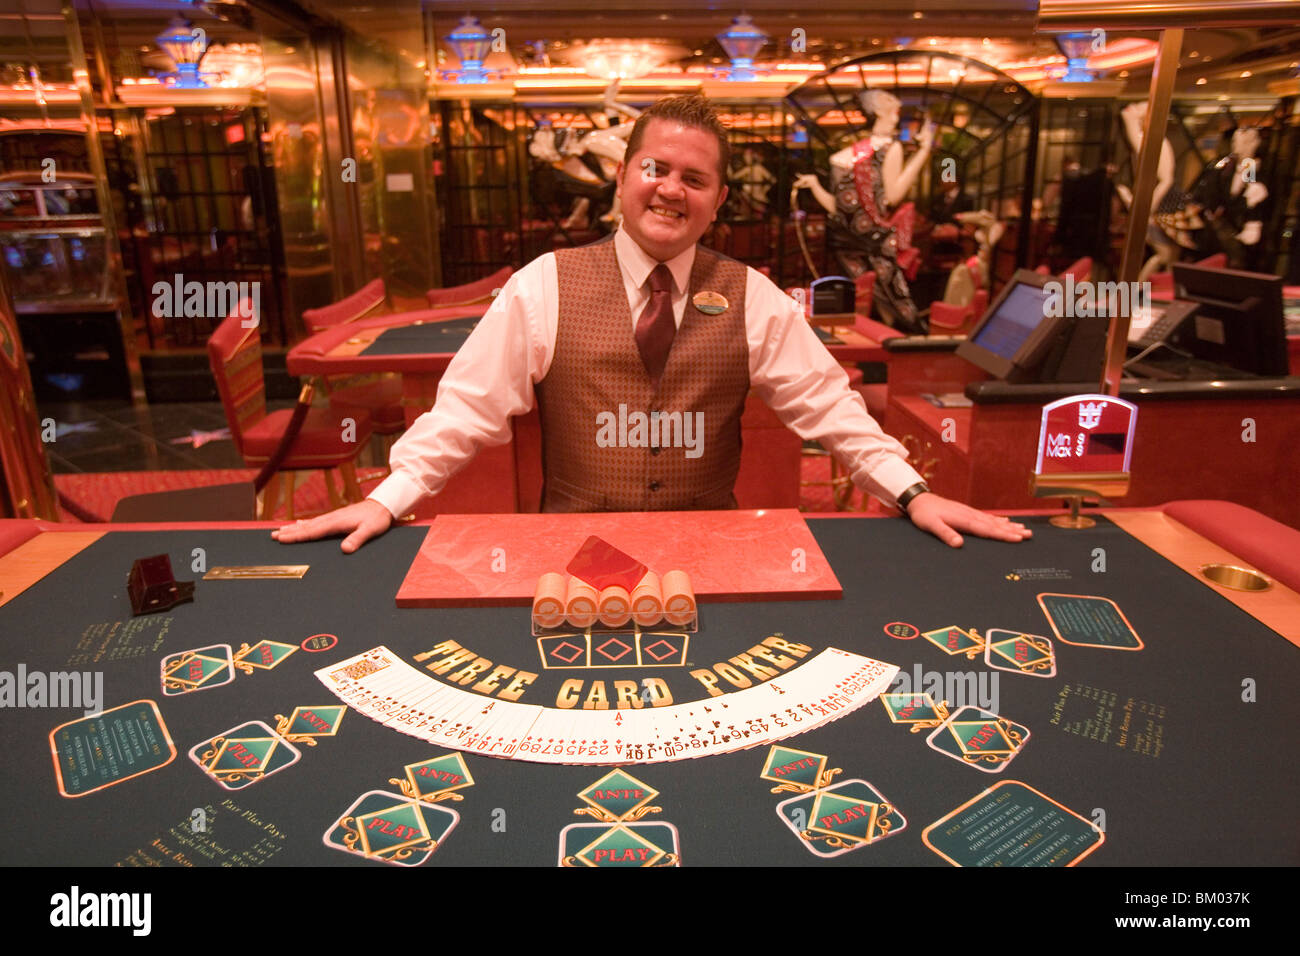 Glücklich Pokerface im Casino Royale auf Deck 4, Freedom Of The Seas Kreuzfahrt Schiff, Royal Caribbean International Cruise Line Stockfoto